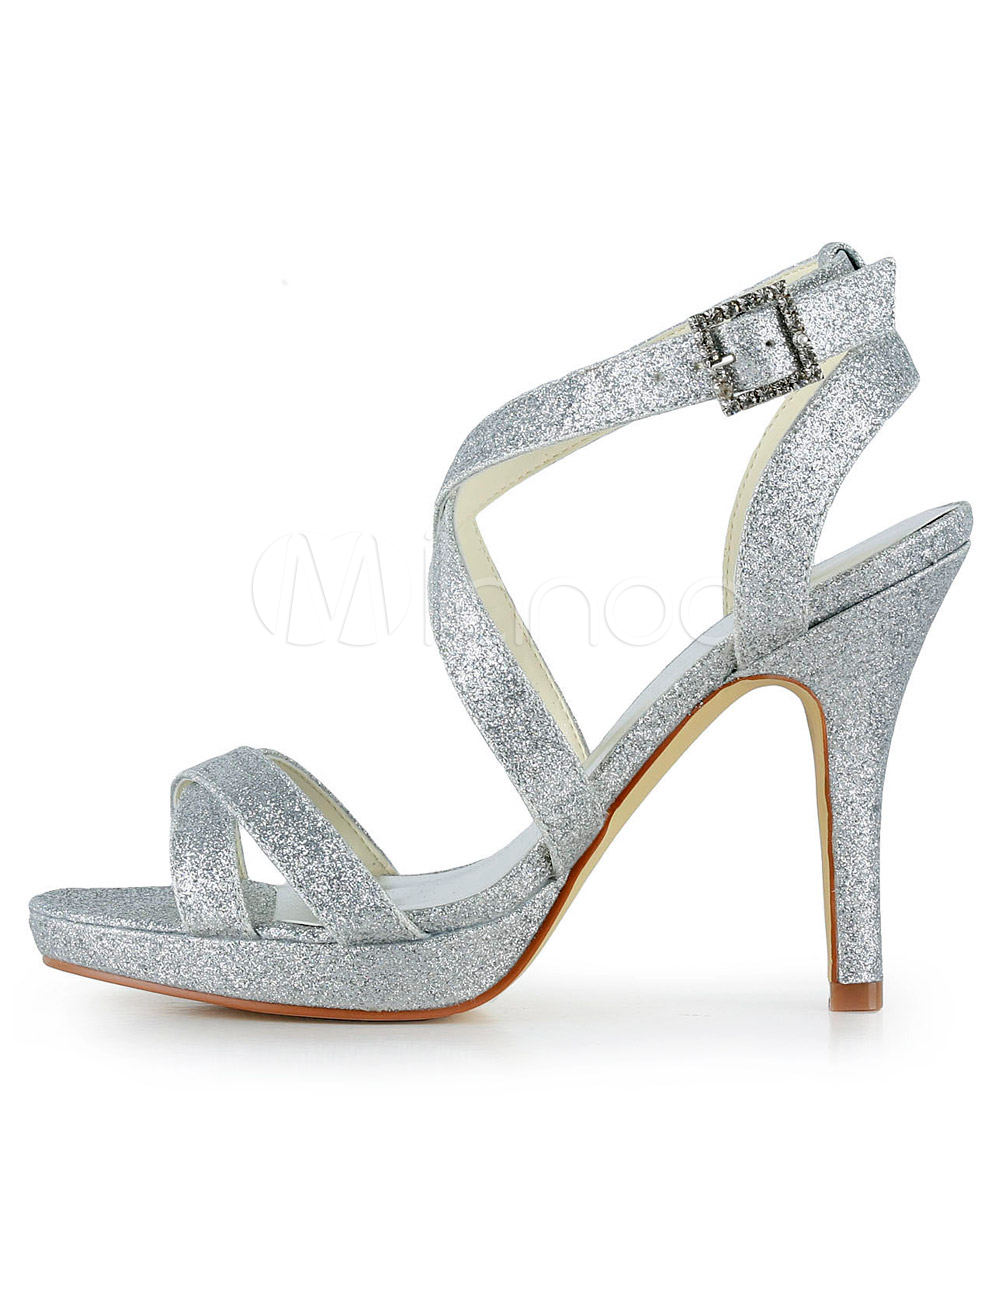 Silver Silk And Satin Open Toe Pumps For Bride - Milanoo.com